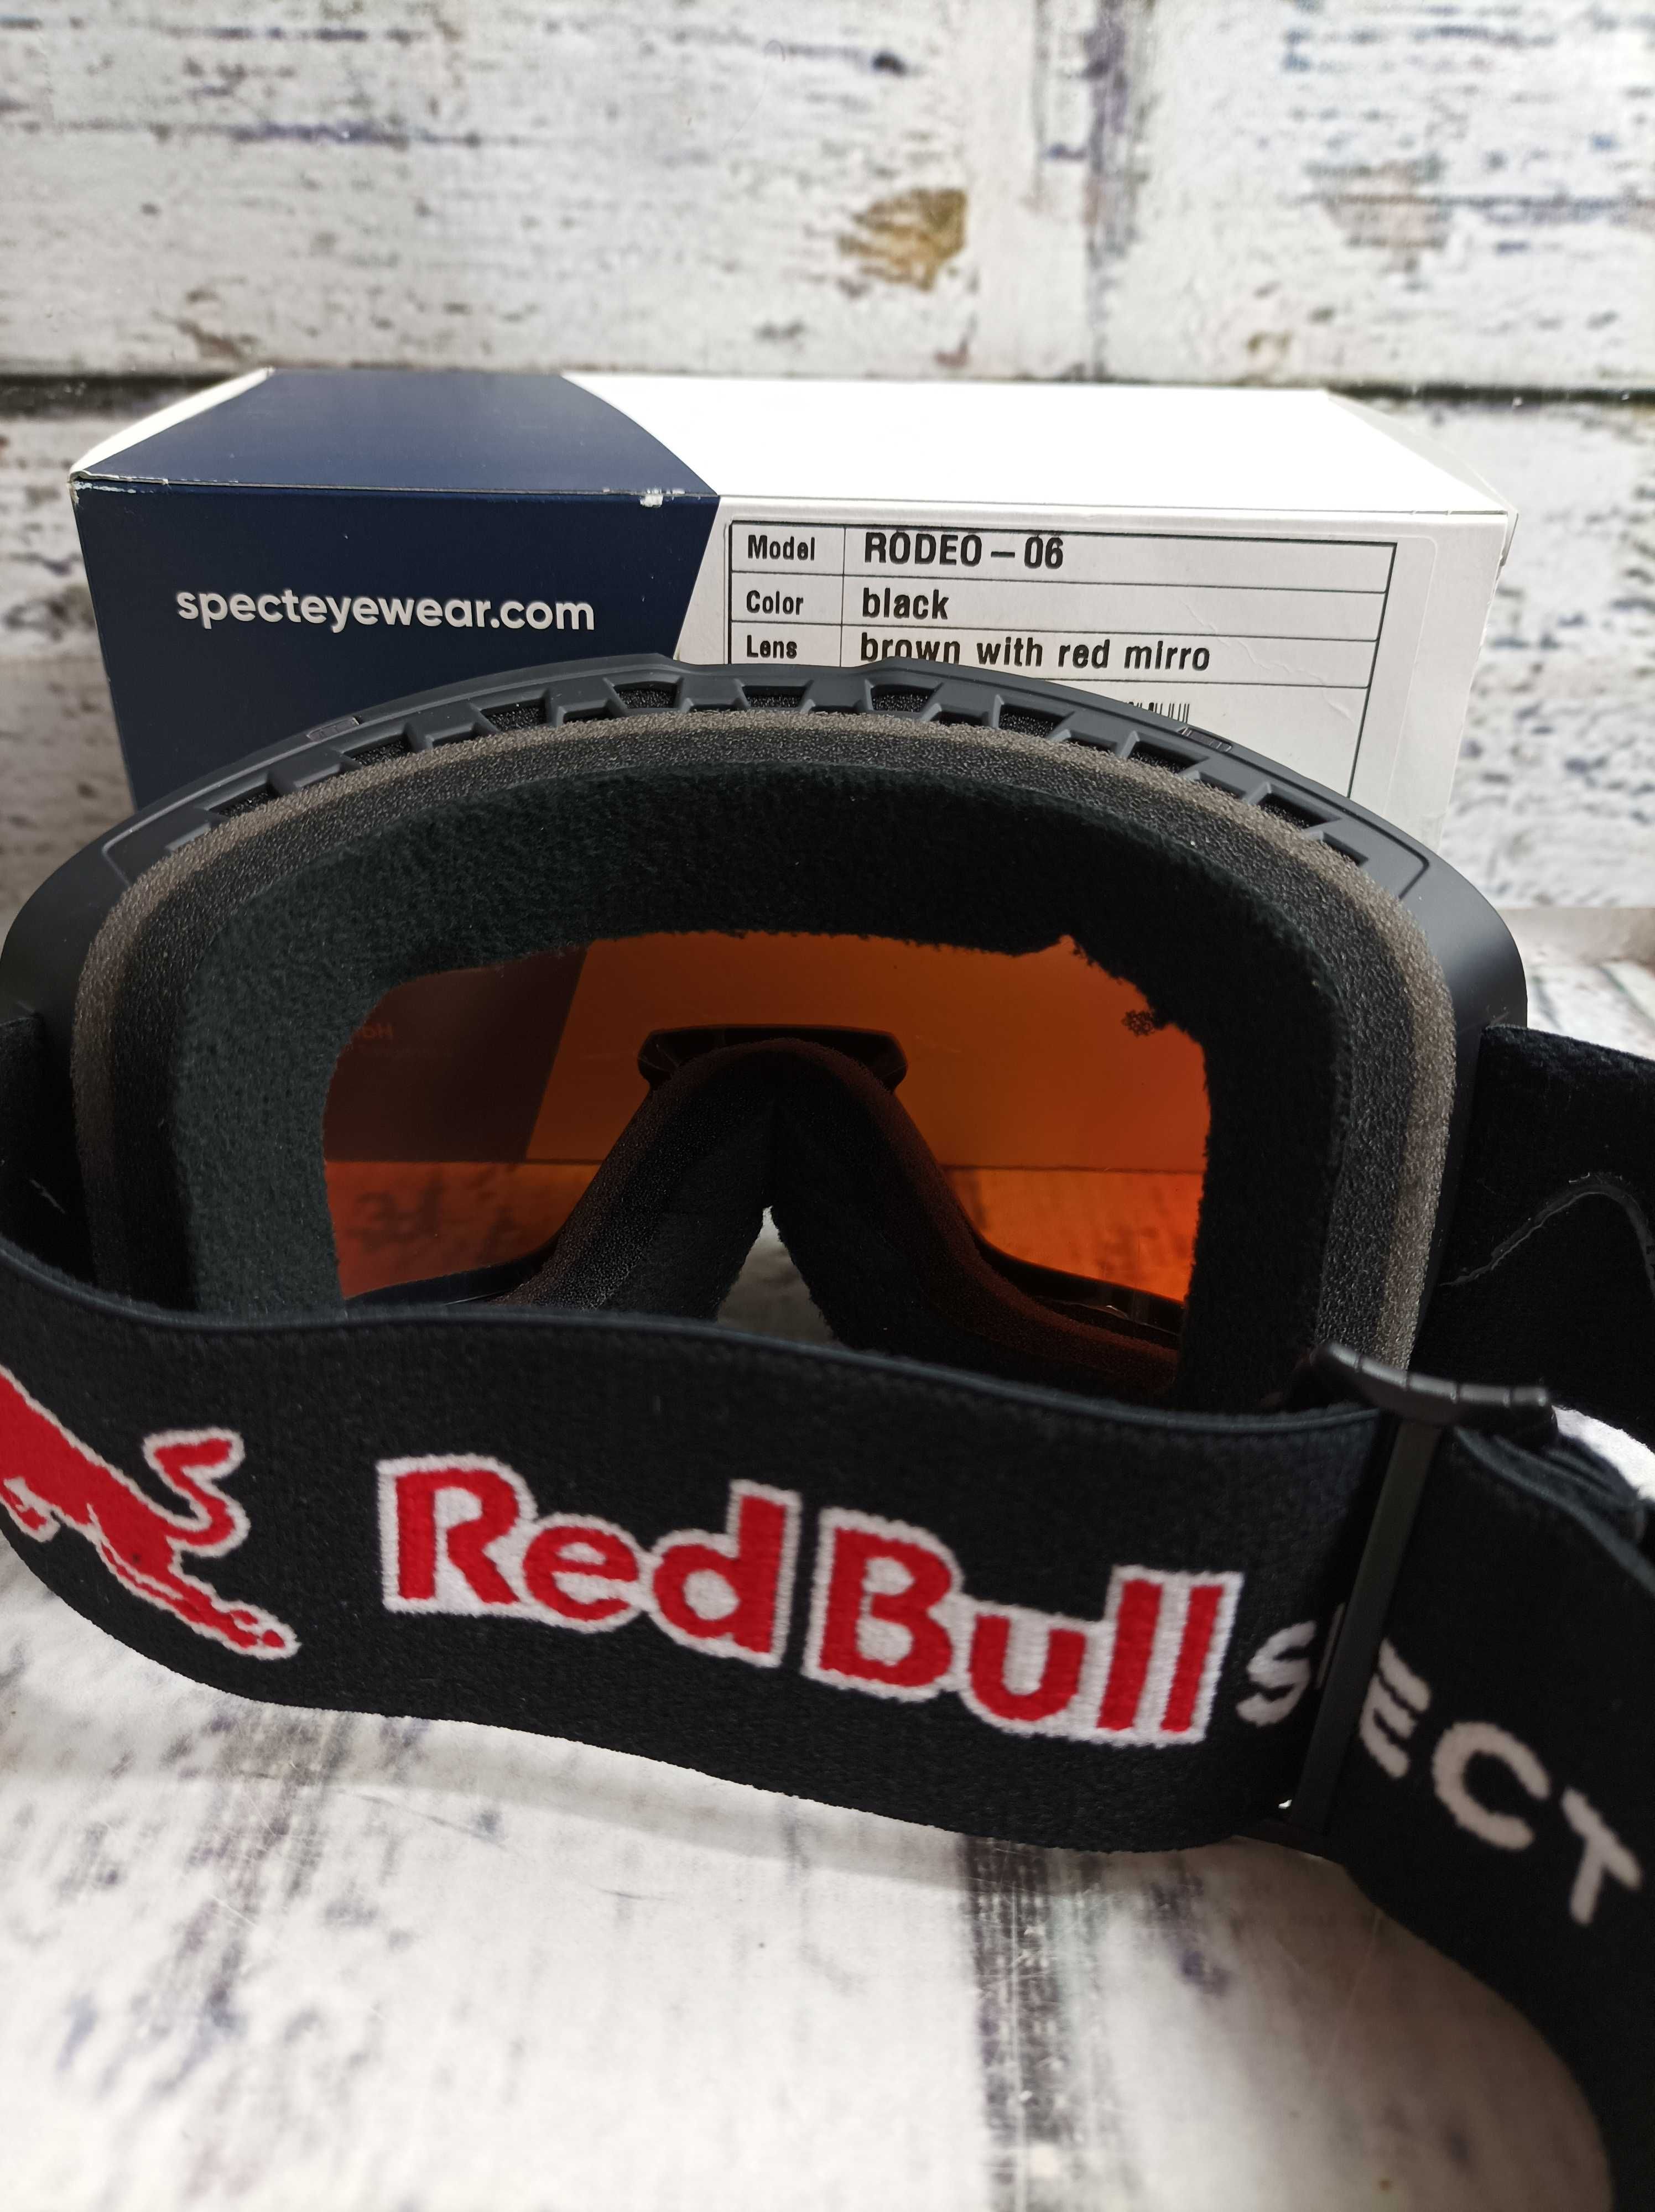 Red Bull Gogle narciarskie Spect Eyewear Snowboard Rodeo 06